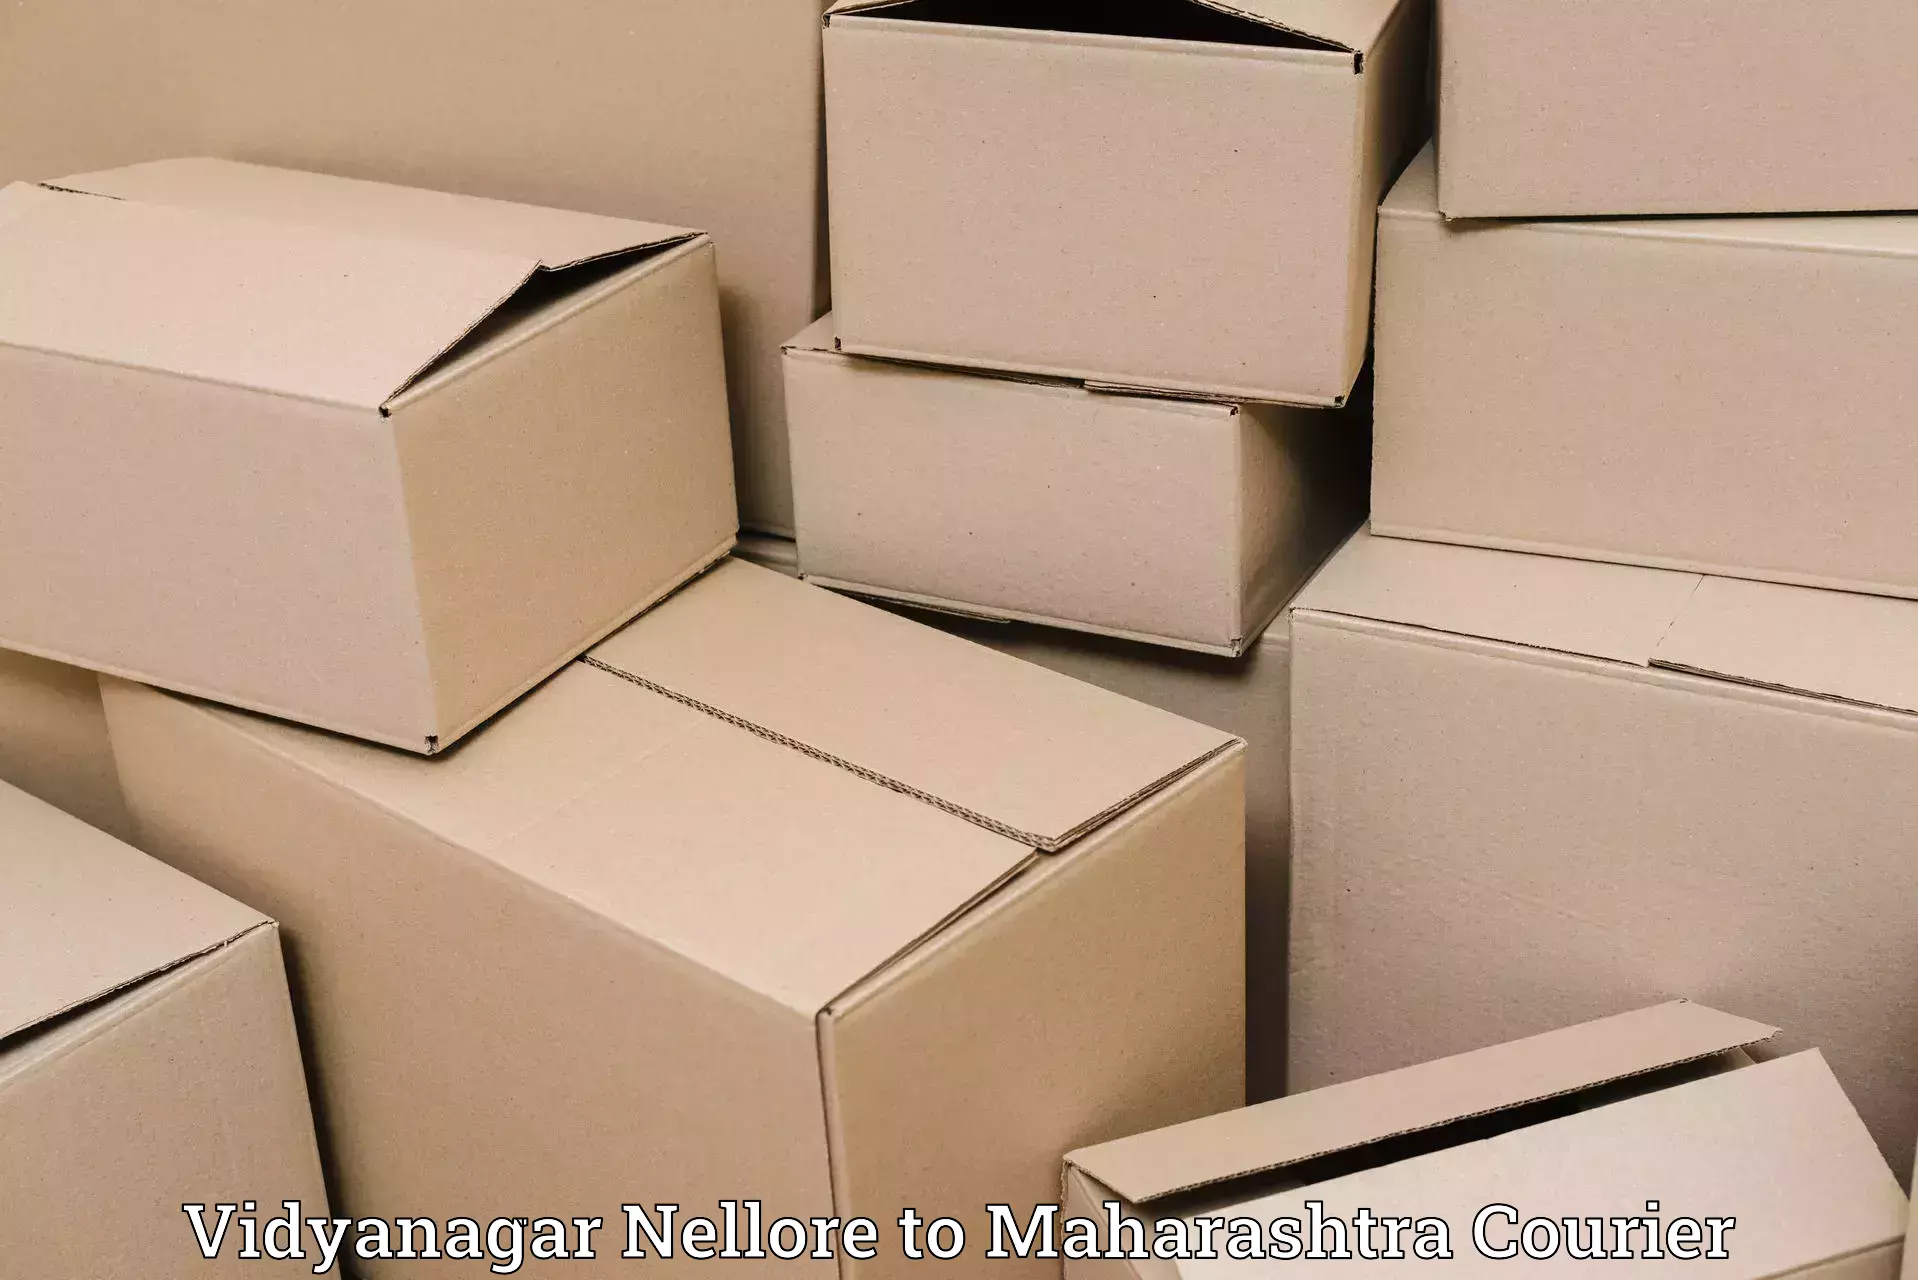 Luggage shipment specialists Vidyanagar Nellore to Maharashtra